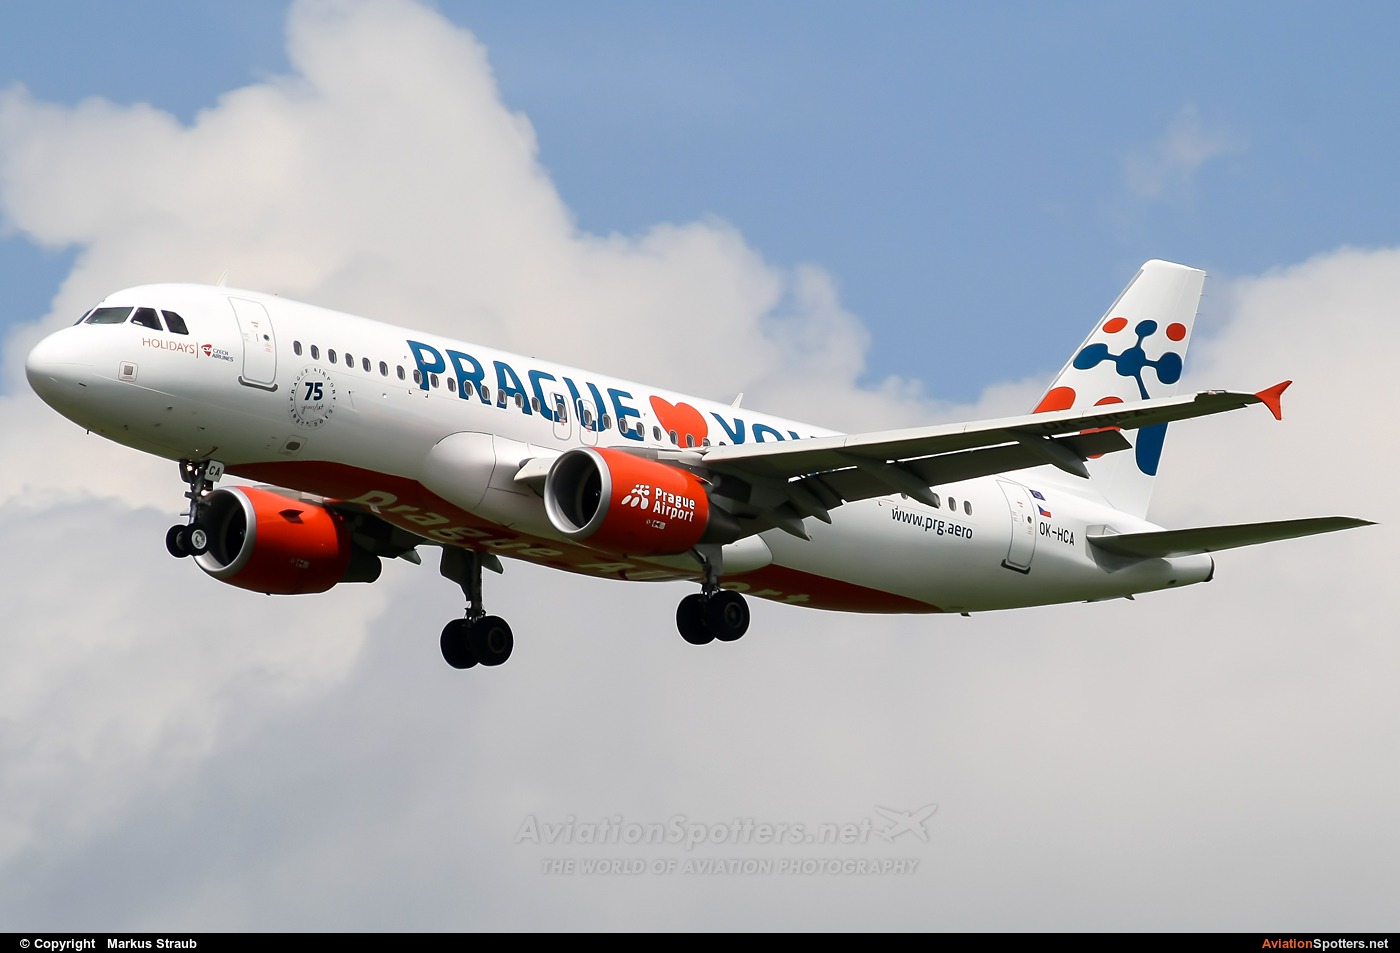 CSA - Holidays Czech Airlines  -  A320  (OK-HCA) By Markus Straub  (spottermarkus)